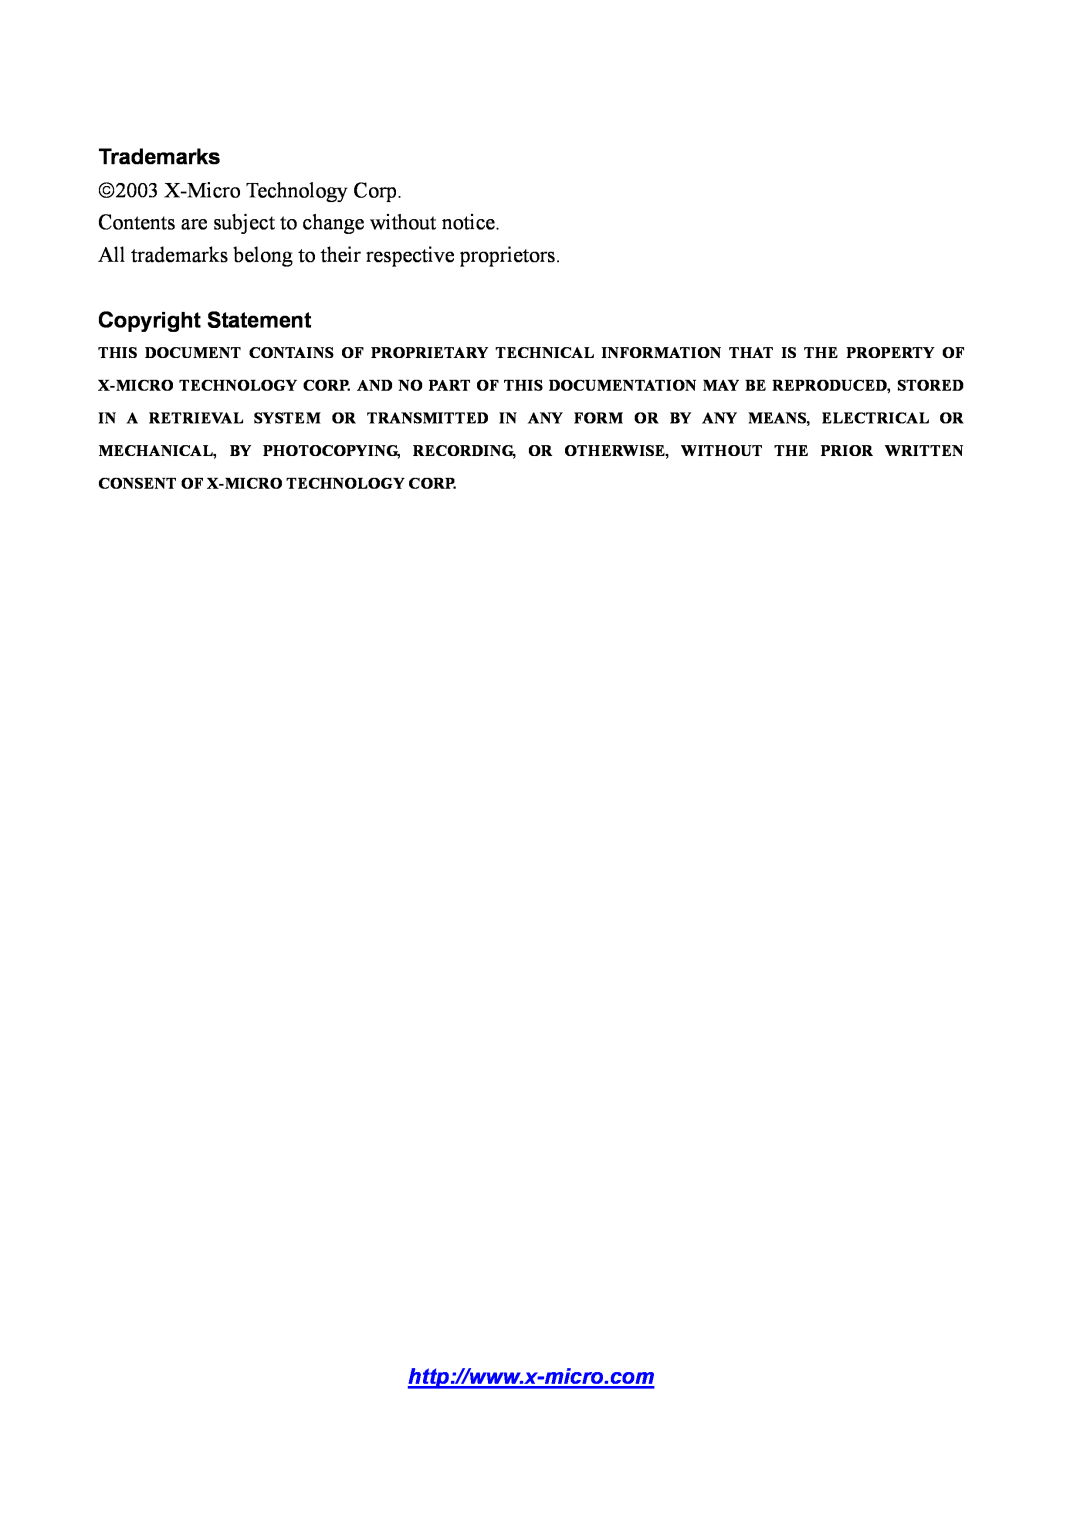 X-Micro Tech IEEE 802.11b user manual Trademarks, Copyright Statement, 2003 X-Micro Technology Corp 